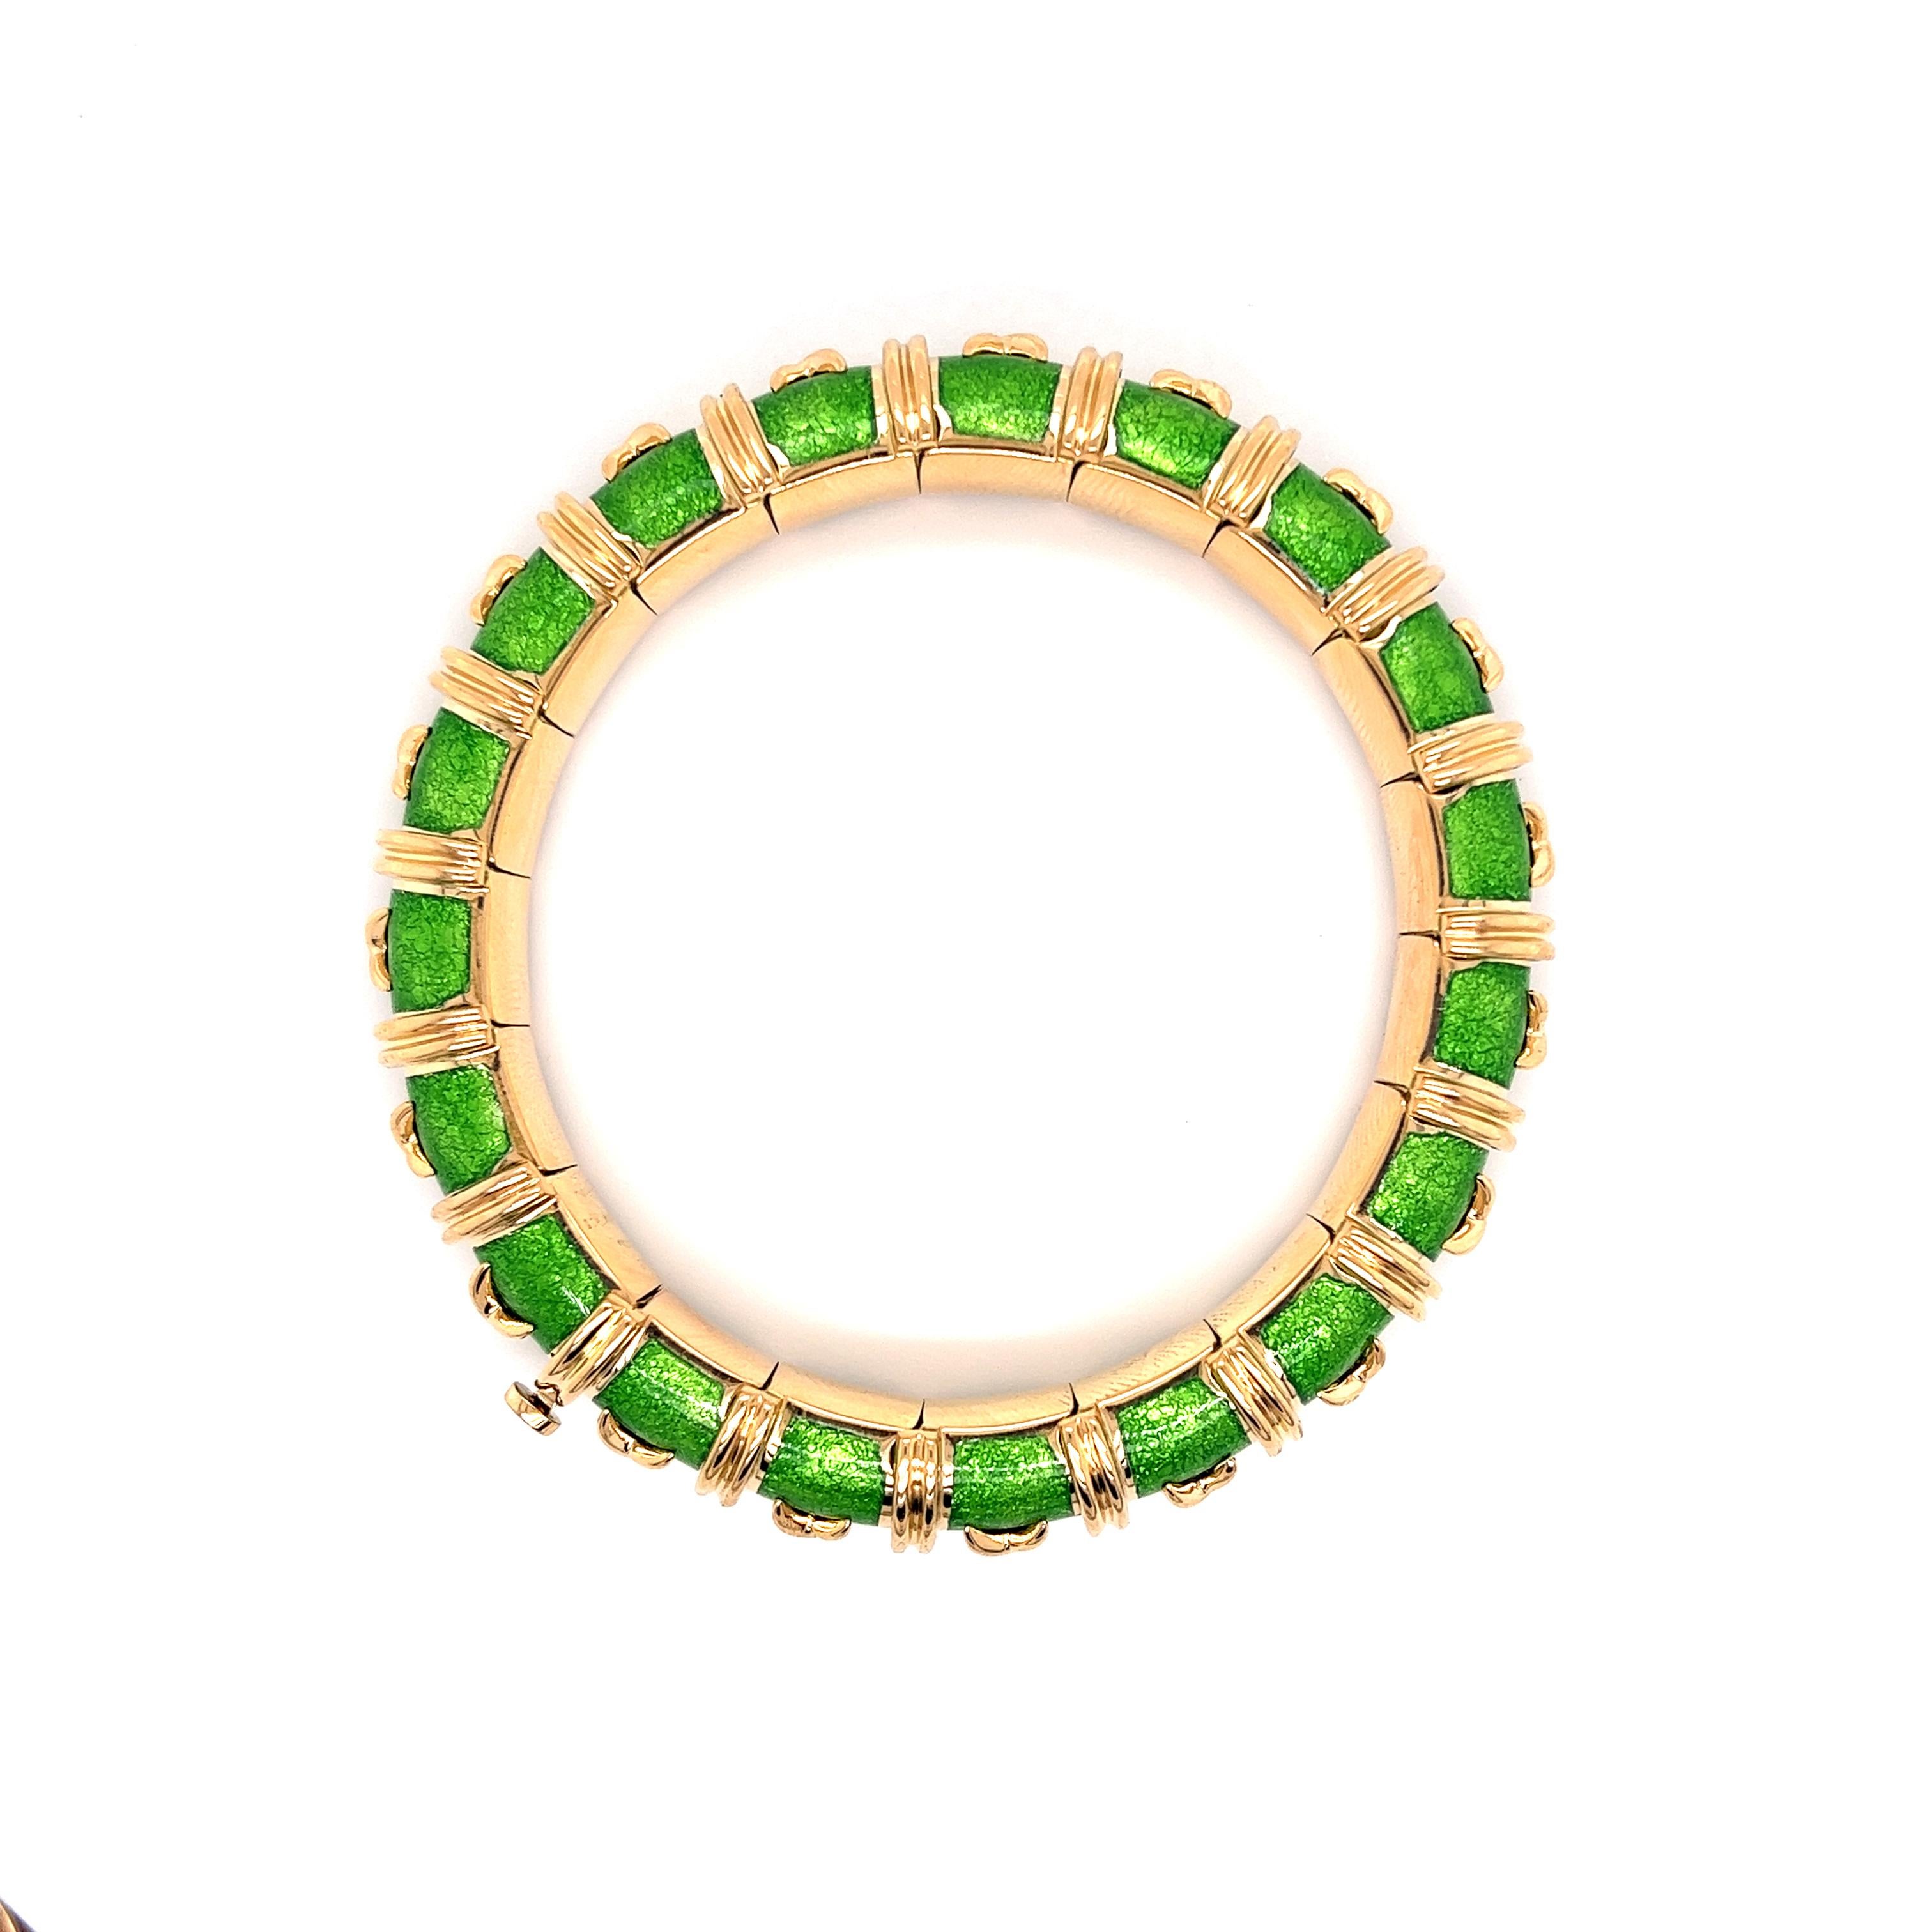 Contemporary Tiffany & Co. Schlumberger Croisillon Green Paillonne Enamel Bangle Bracelet